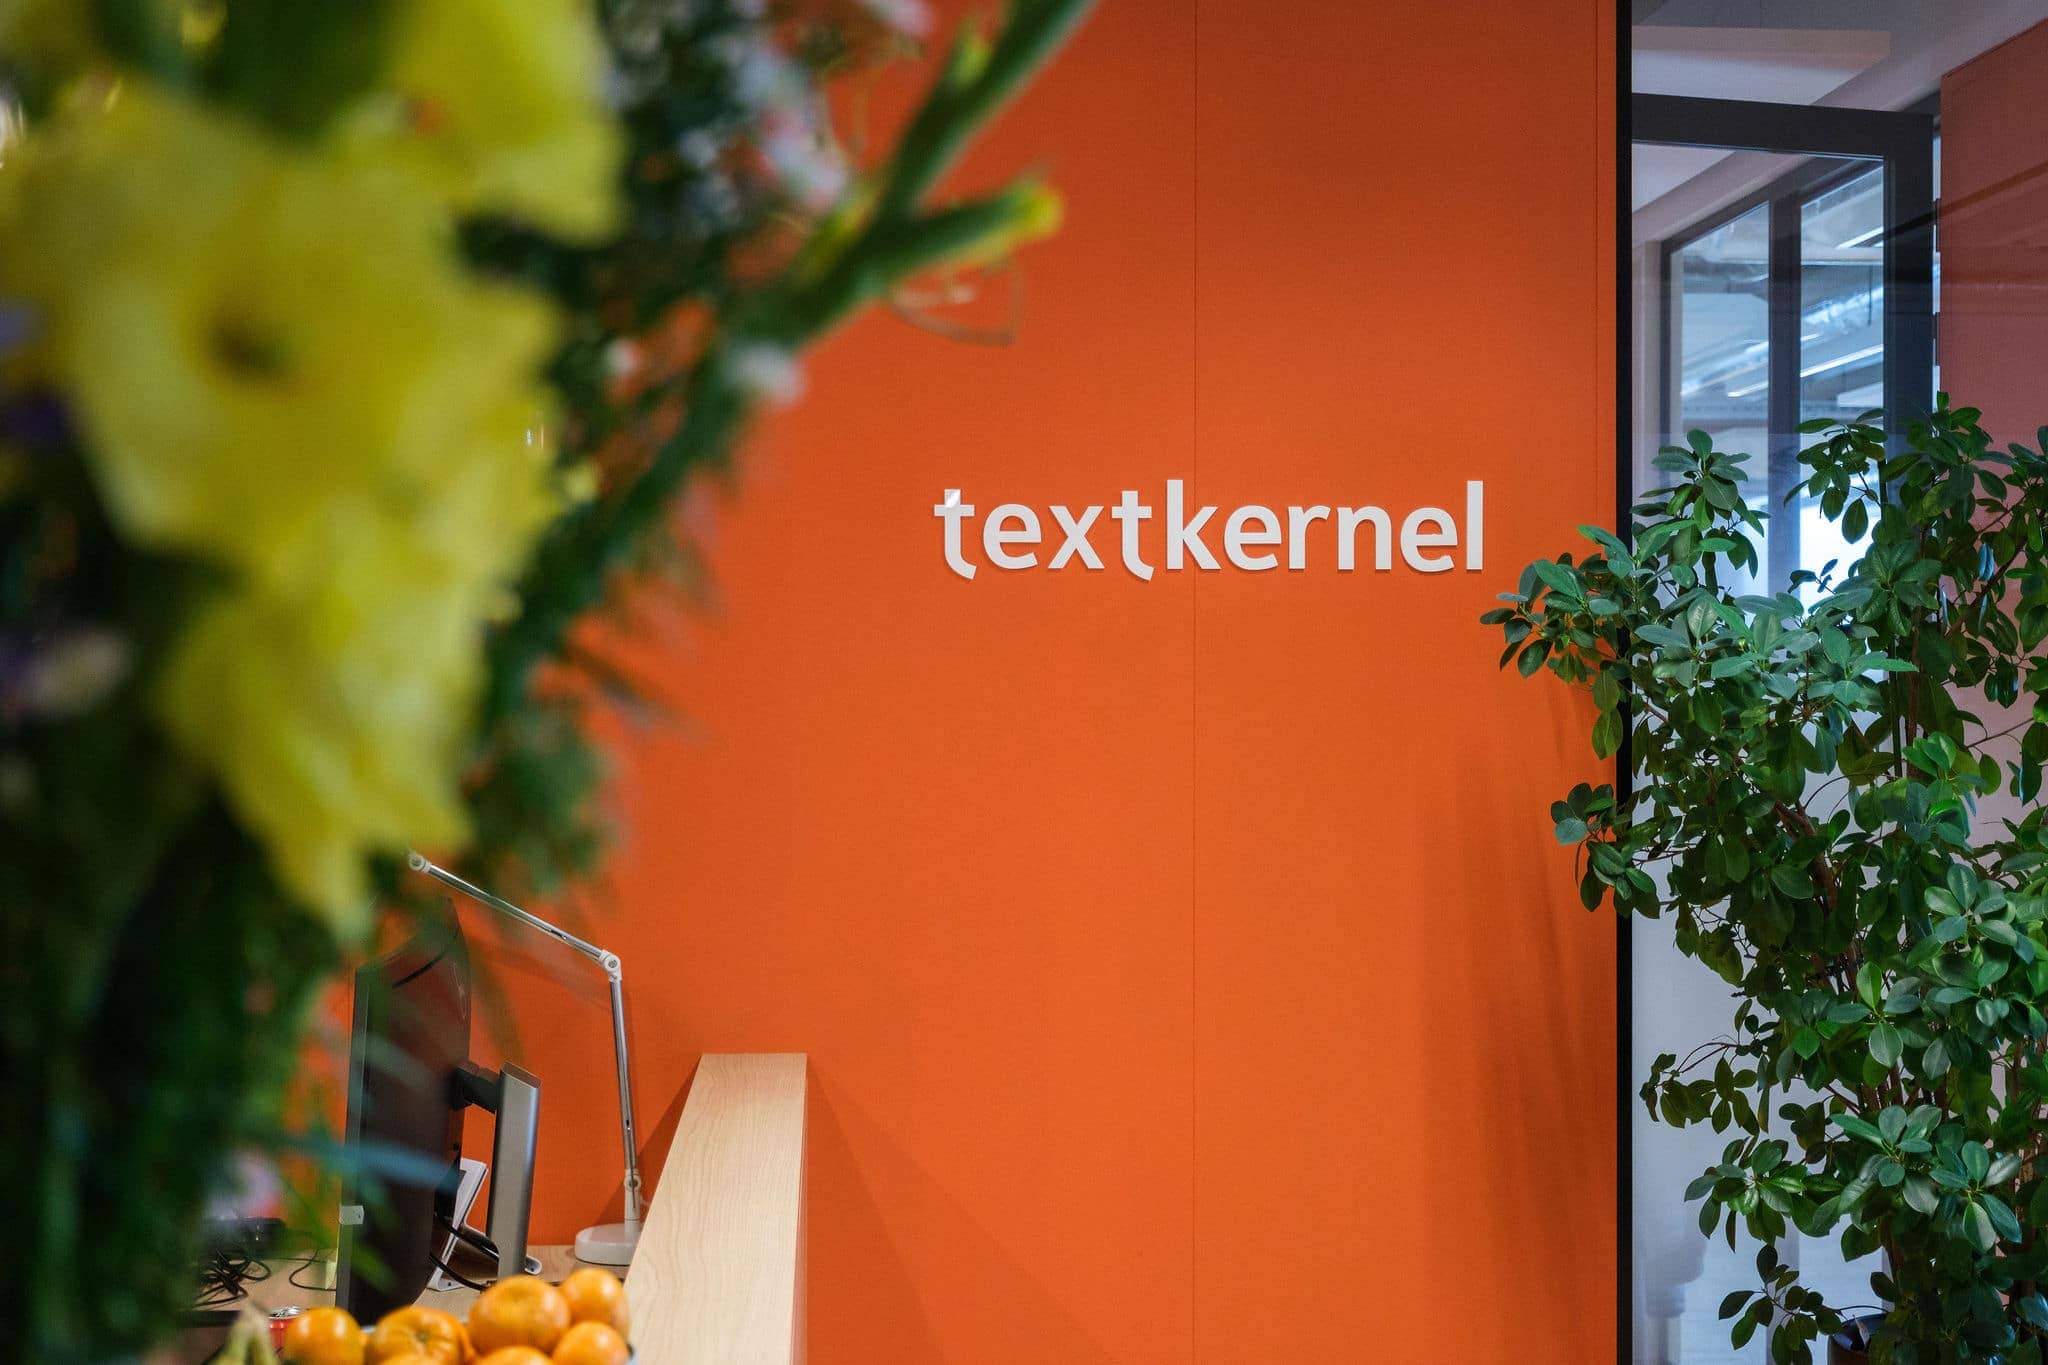 textkernel office